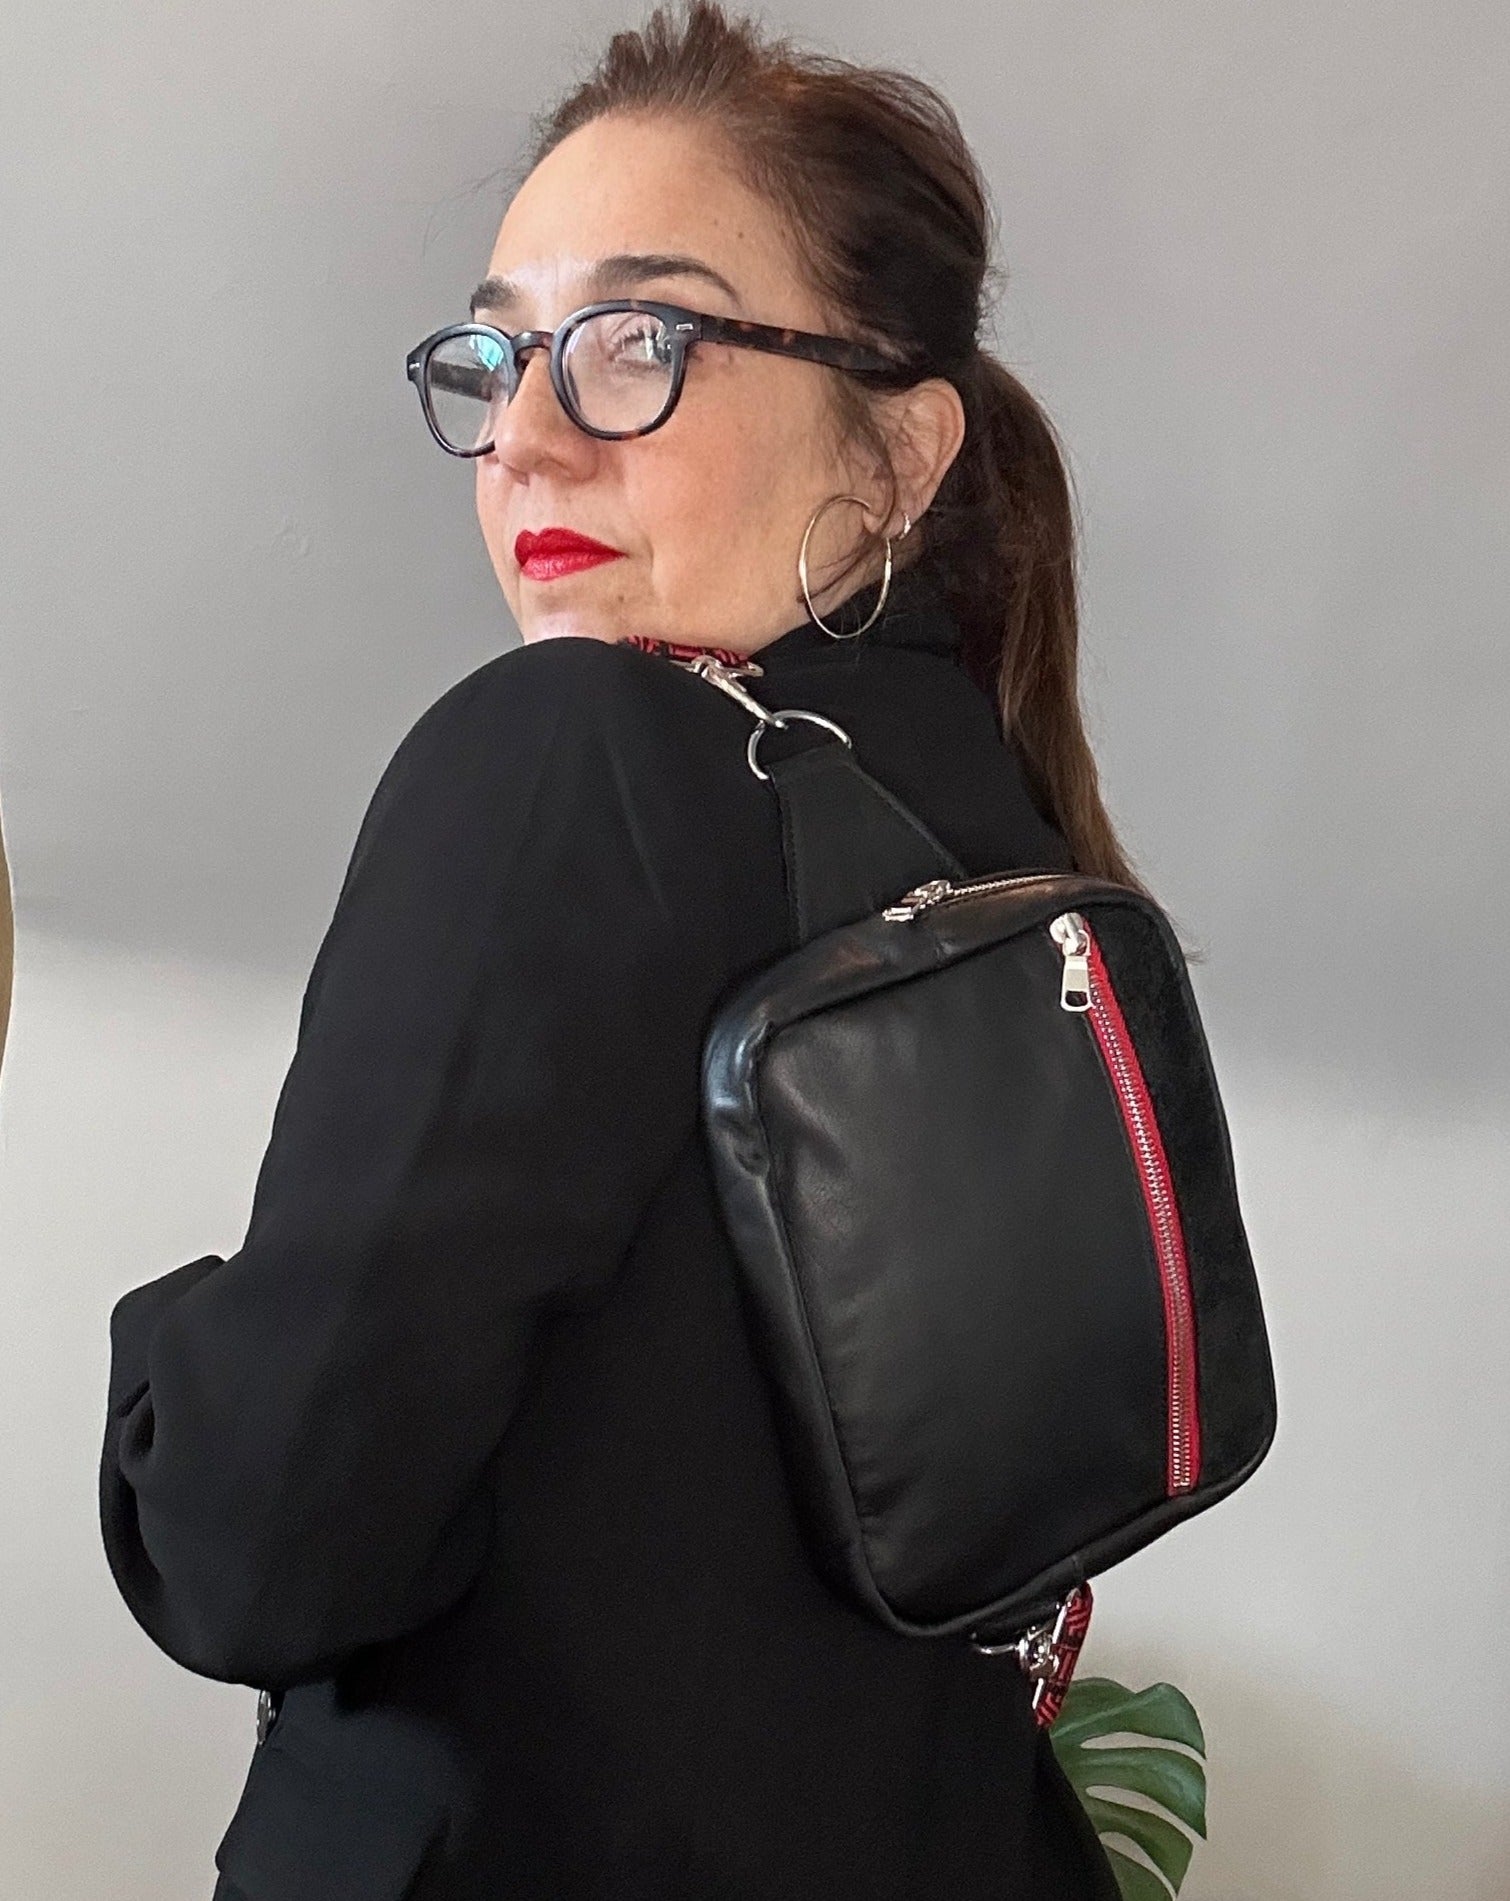 Black leather unisex sling, the ultimate travel bag.